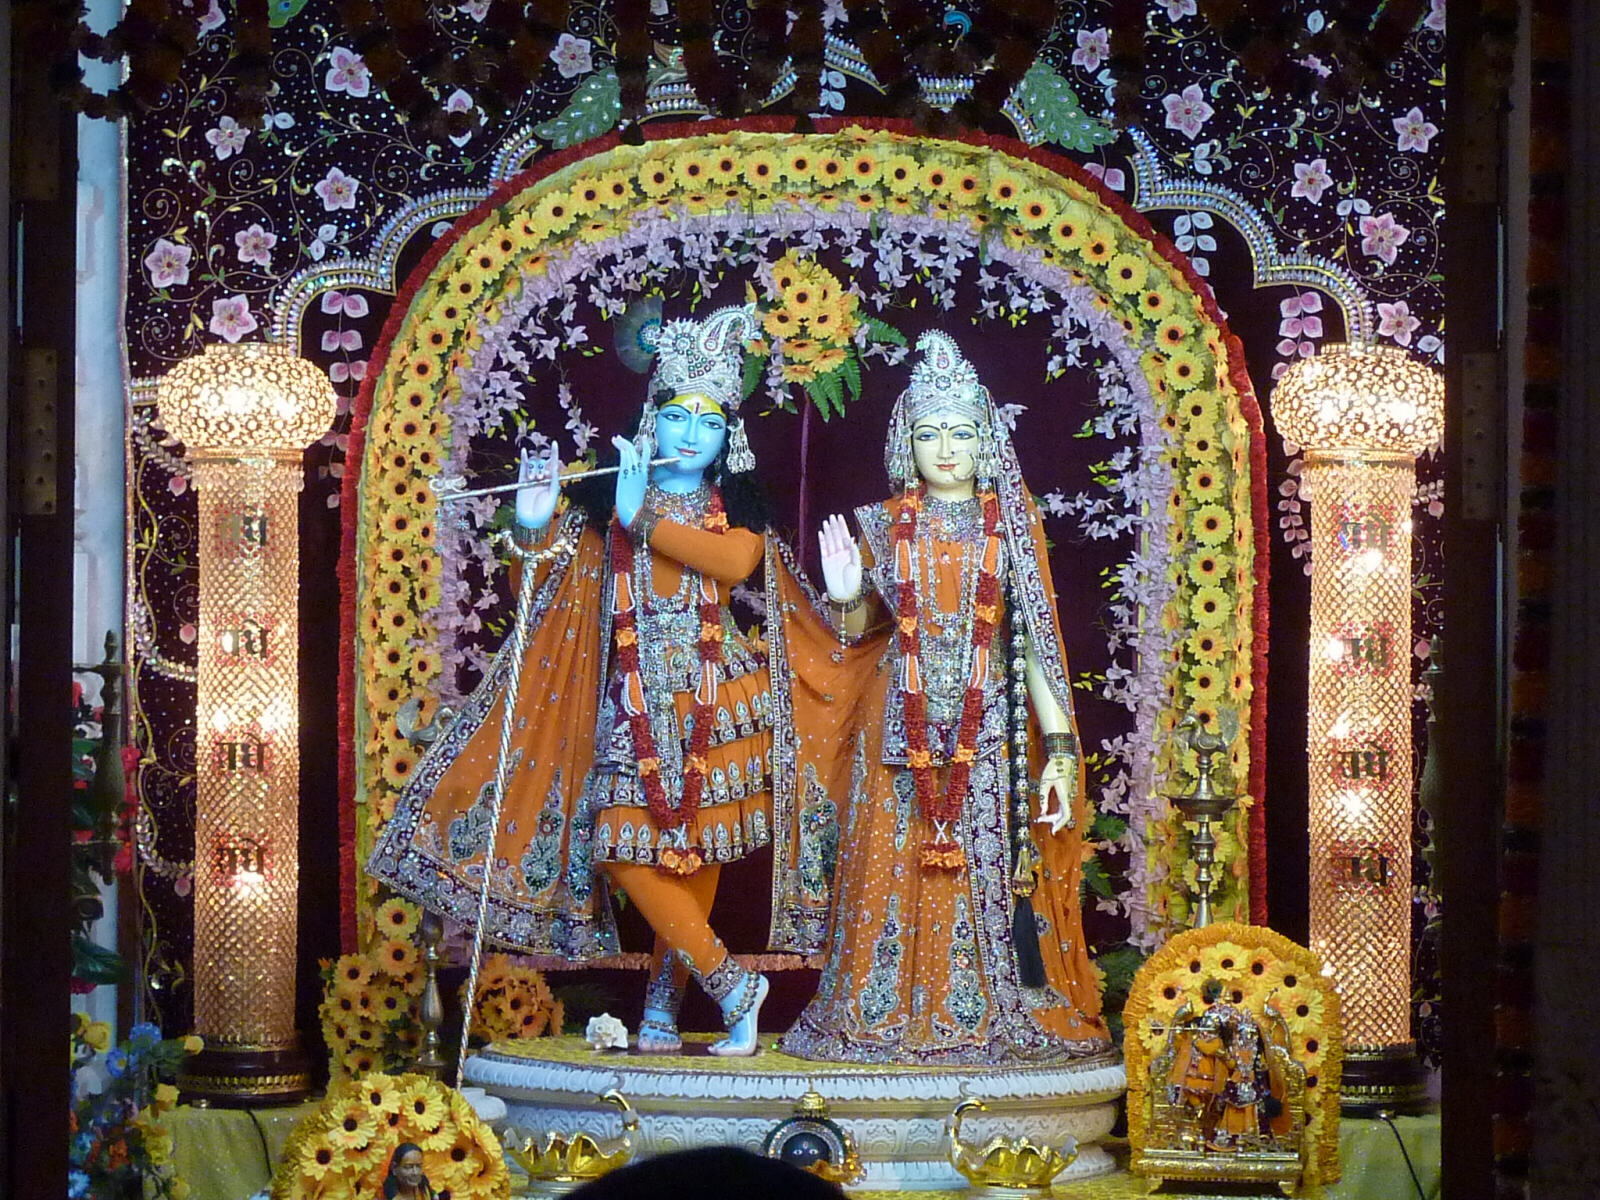 Krishna and his consort in Prem Mandir, Vrindavan, India